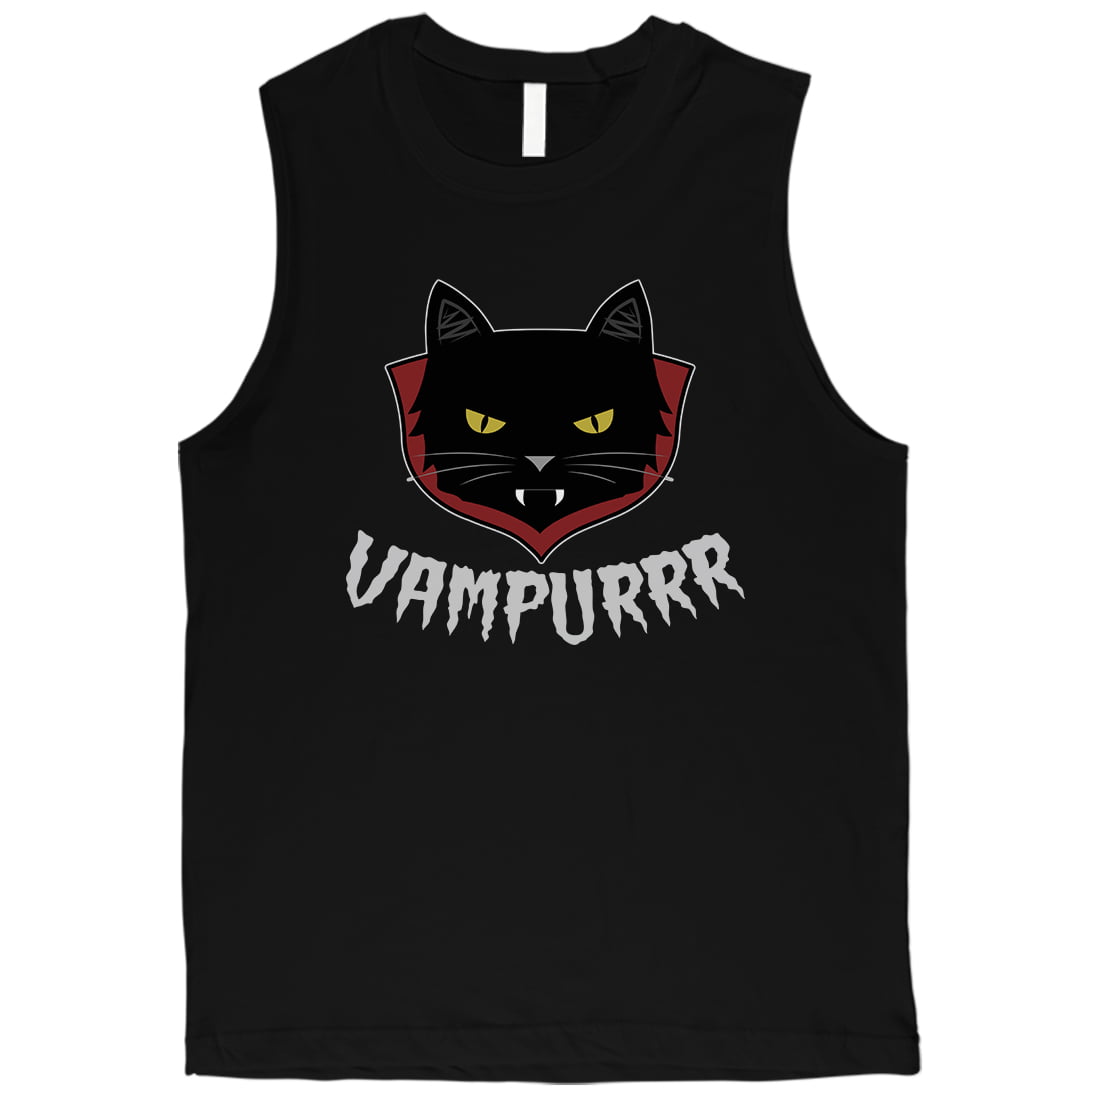 Vampurrr Funny Halloween Costume Cute Mens Black Muscle Shirt - Walmart.com